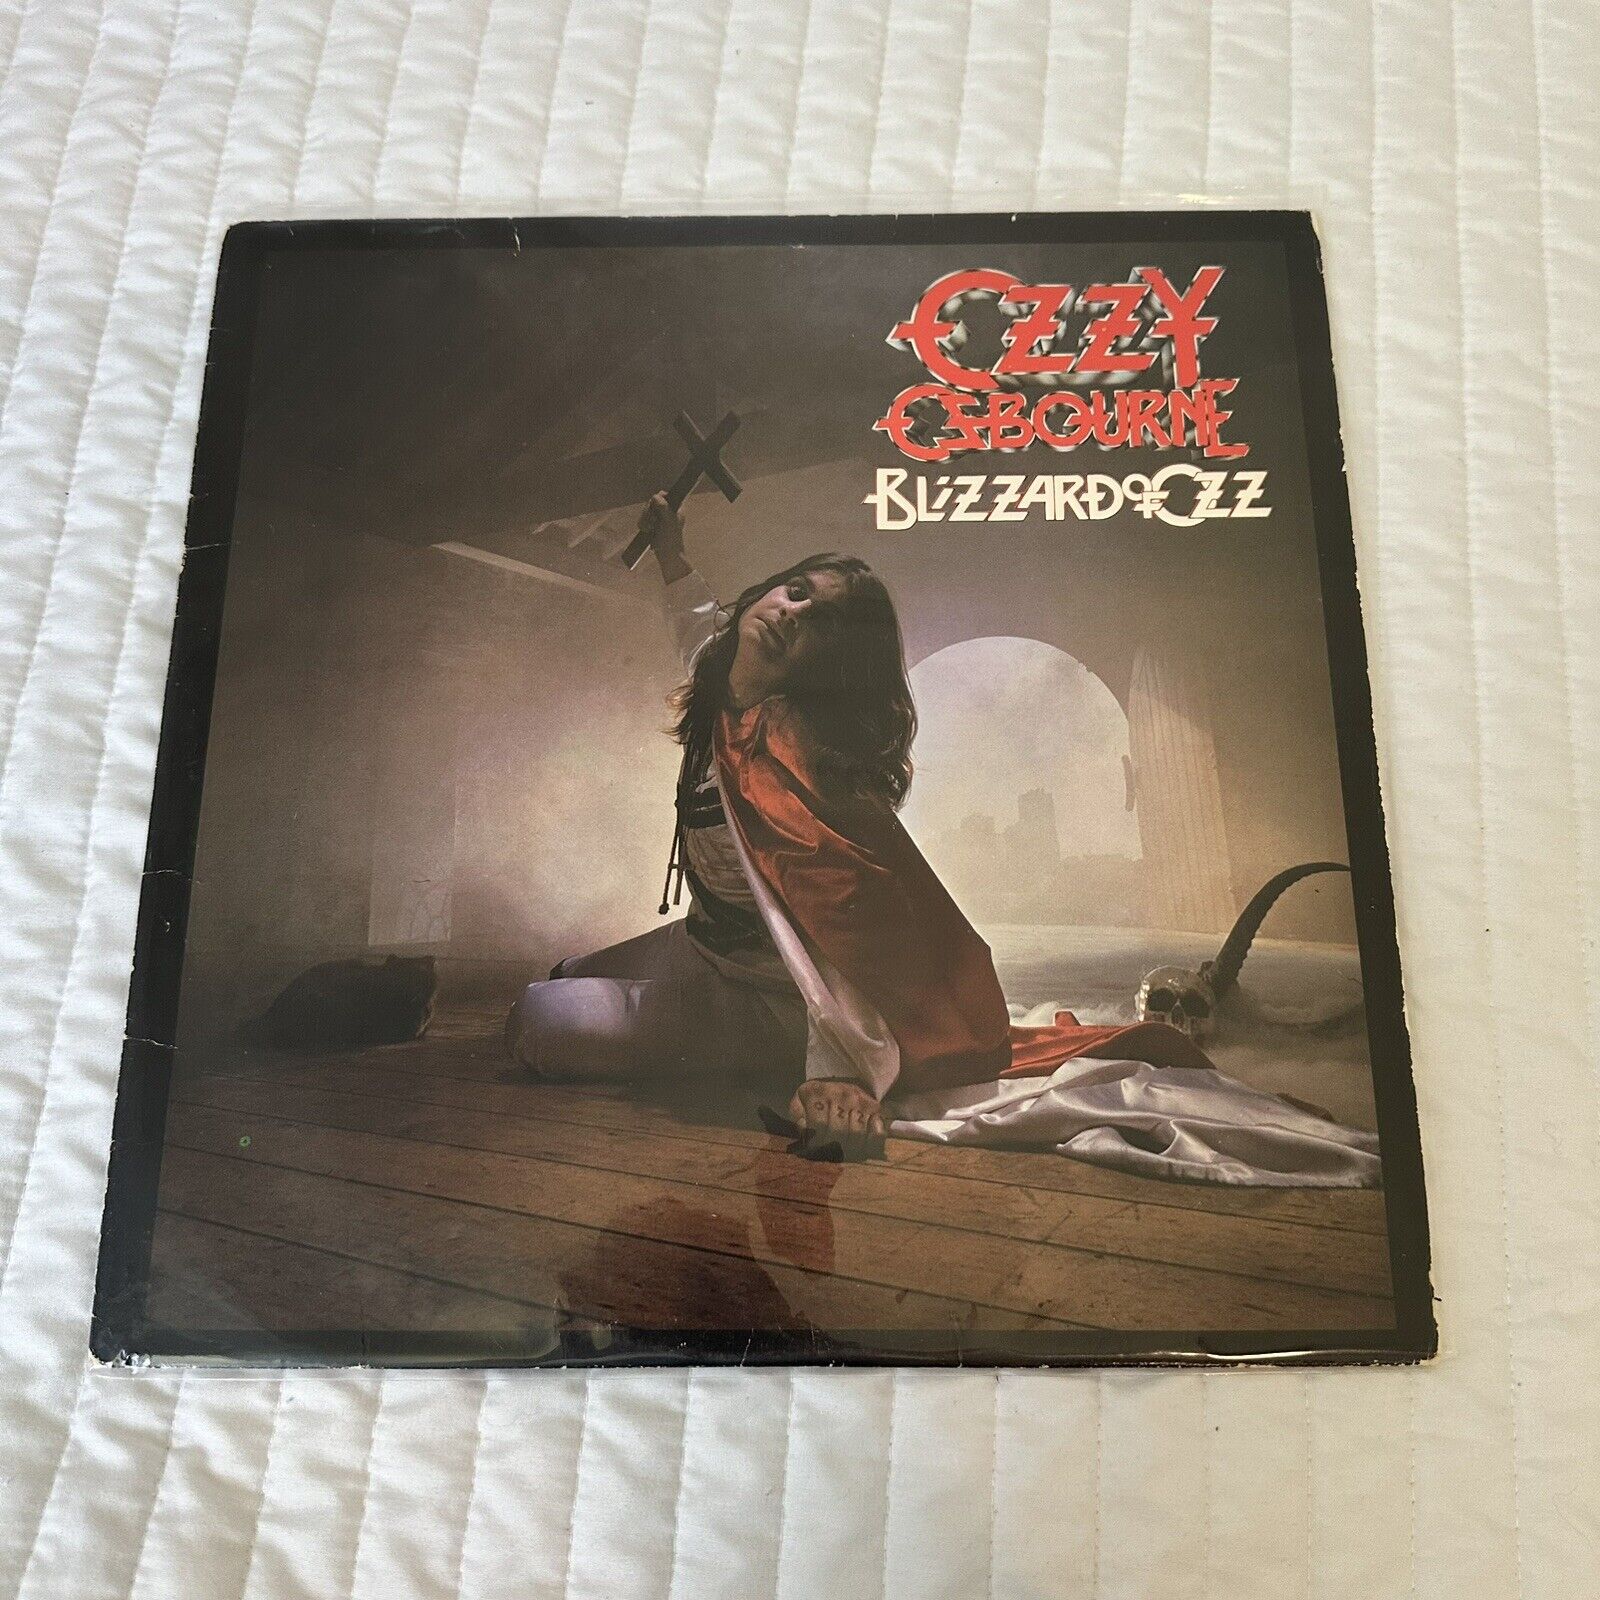 Ozzy Osbourne – Blizzard Of Ozz - 1981 Vinyl LP Record Album